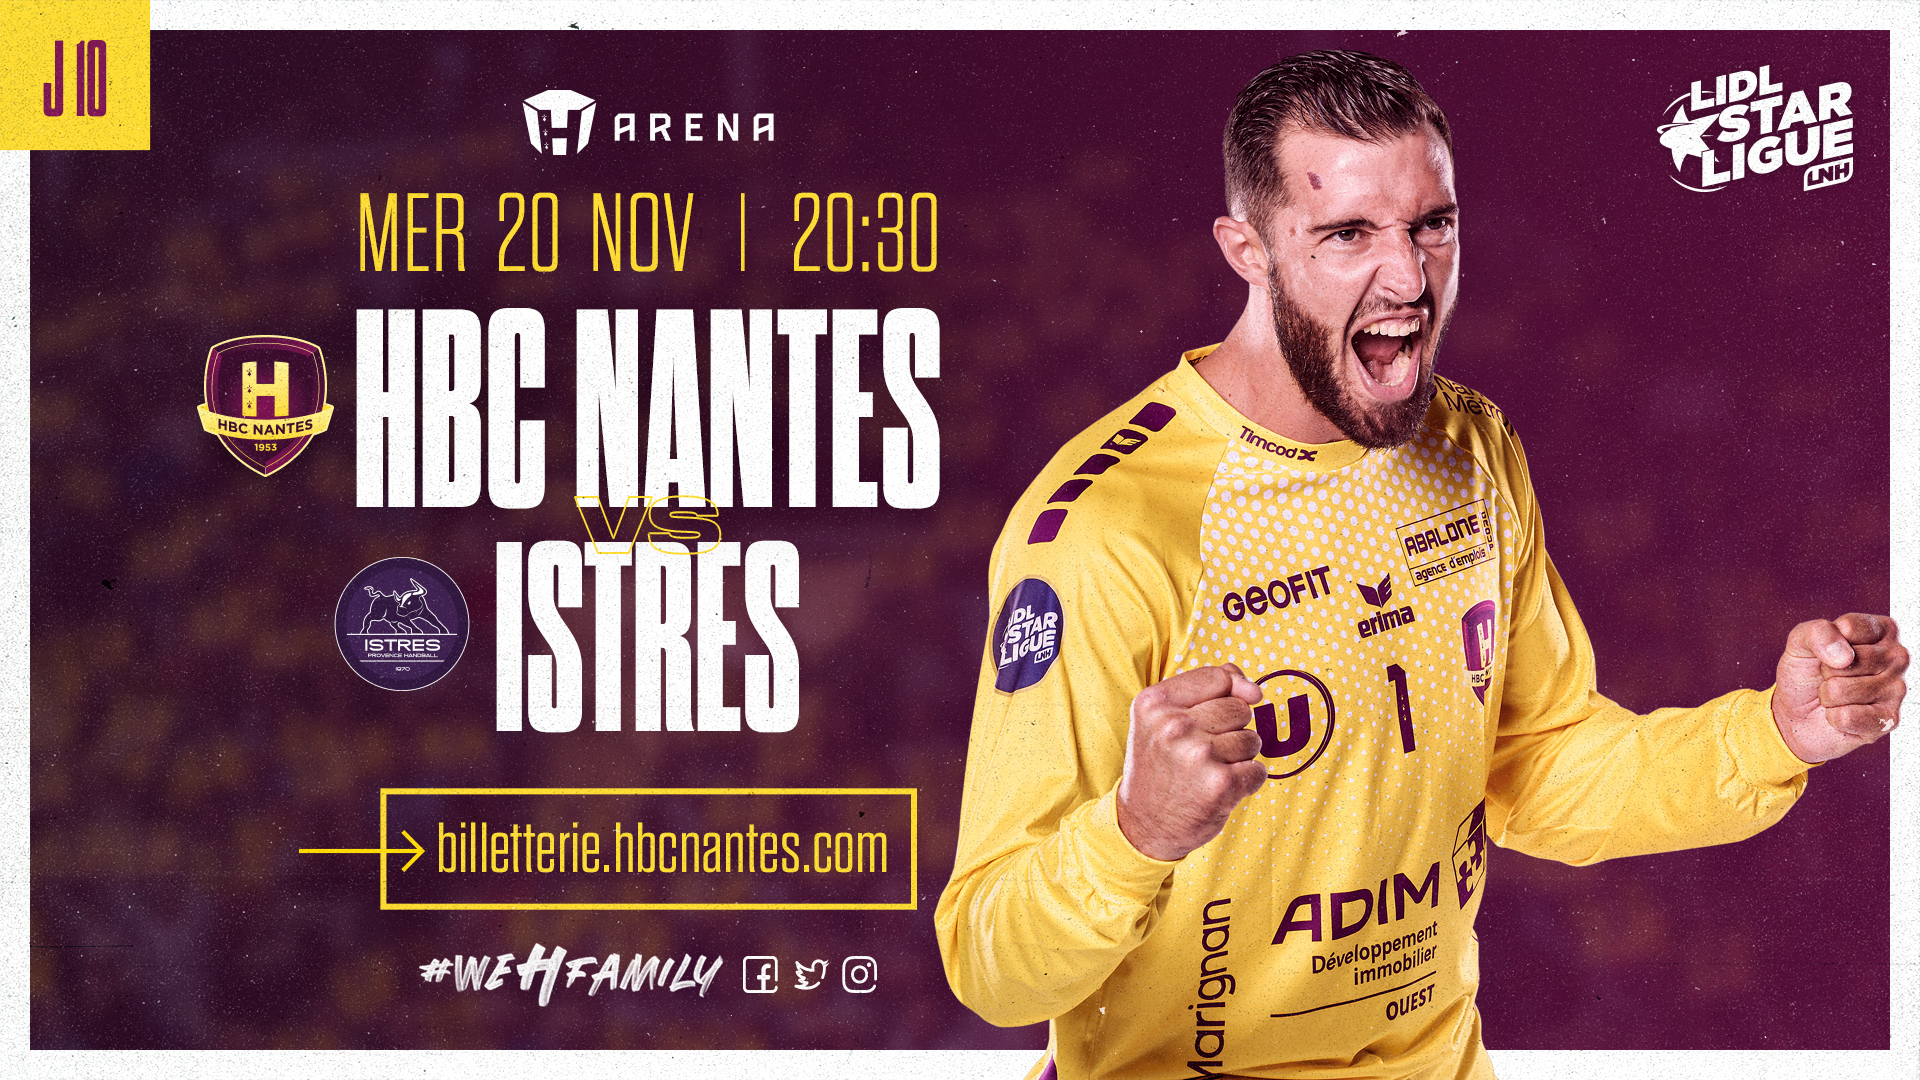 HBC Nantes - Istres : Infos pratiques